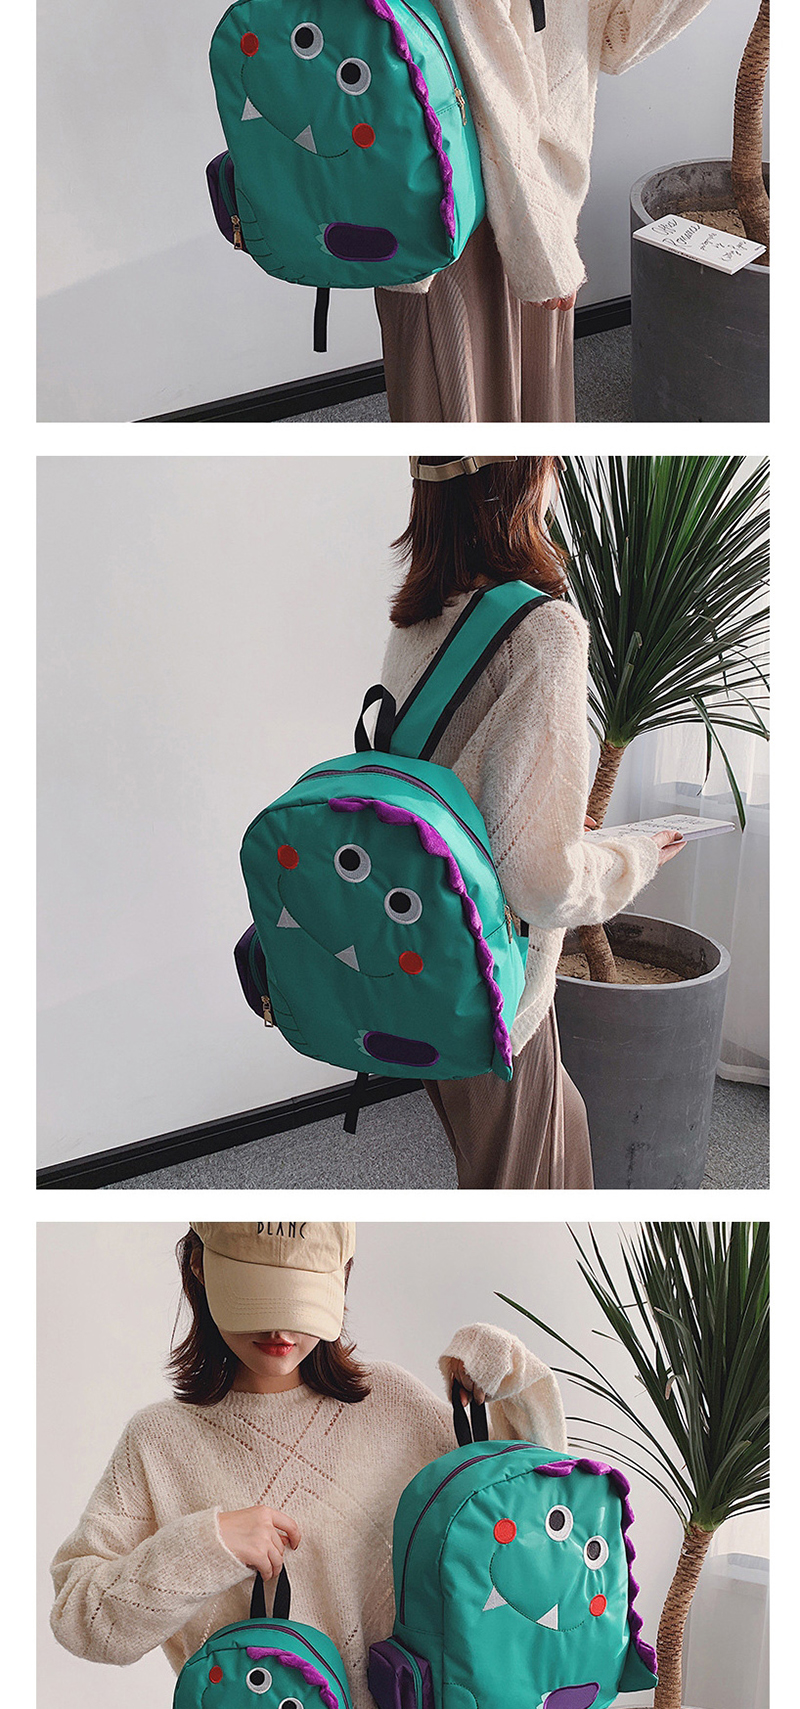 Fashion Small Blue Green Cartoon Dinosaur Oxford Backpack,Backpack